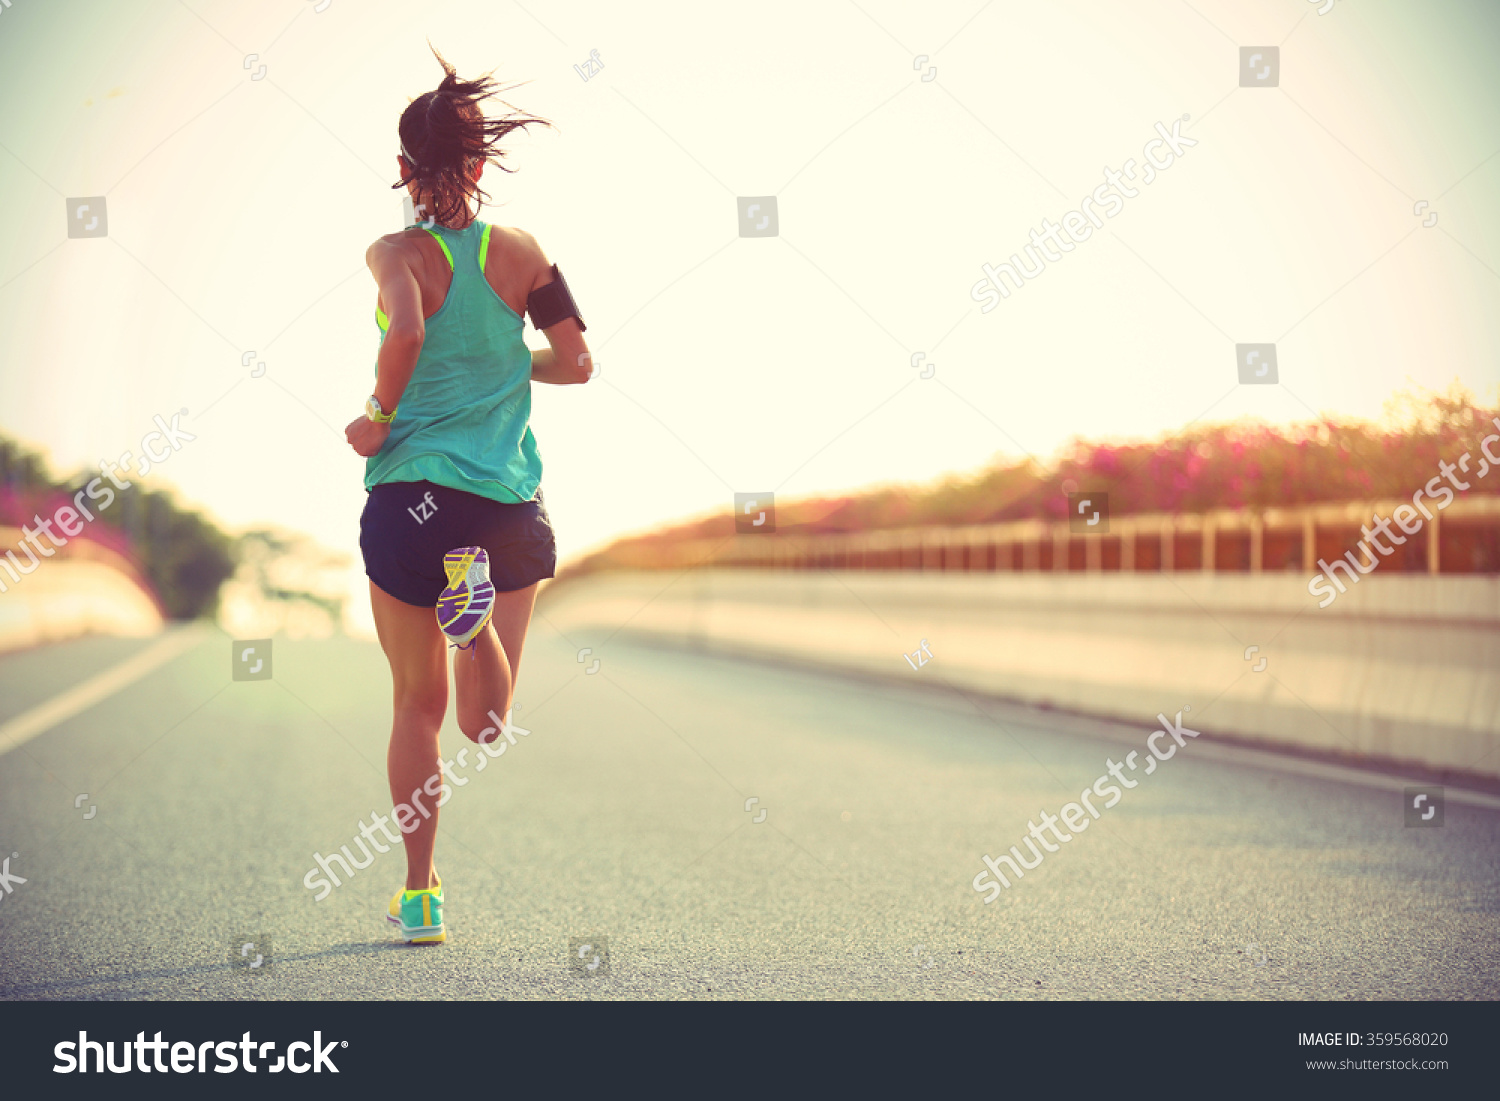 Young woman runner running on city bridge road #359568020